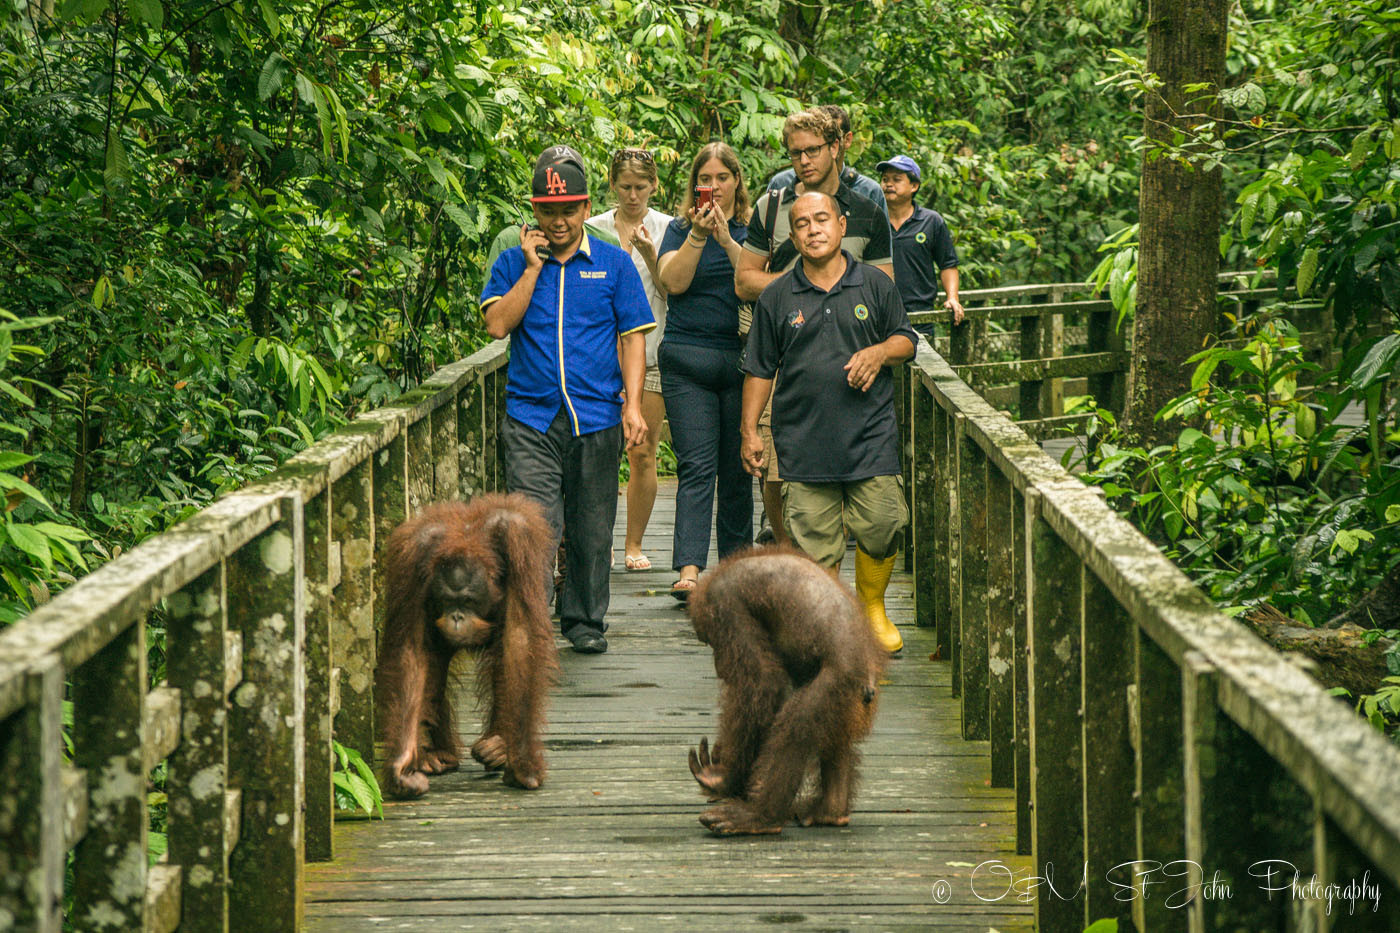 Borneo Orangutan in Sepilok Orangutan Rehabilitation Centre. Sabah. Malaysian Borneo